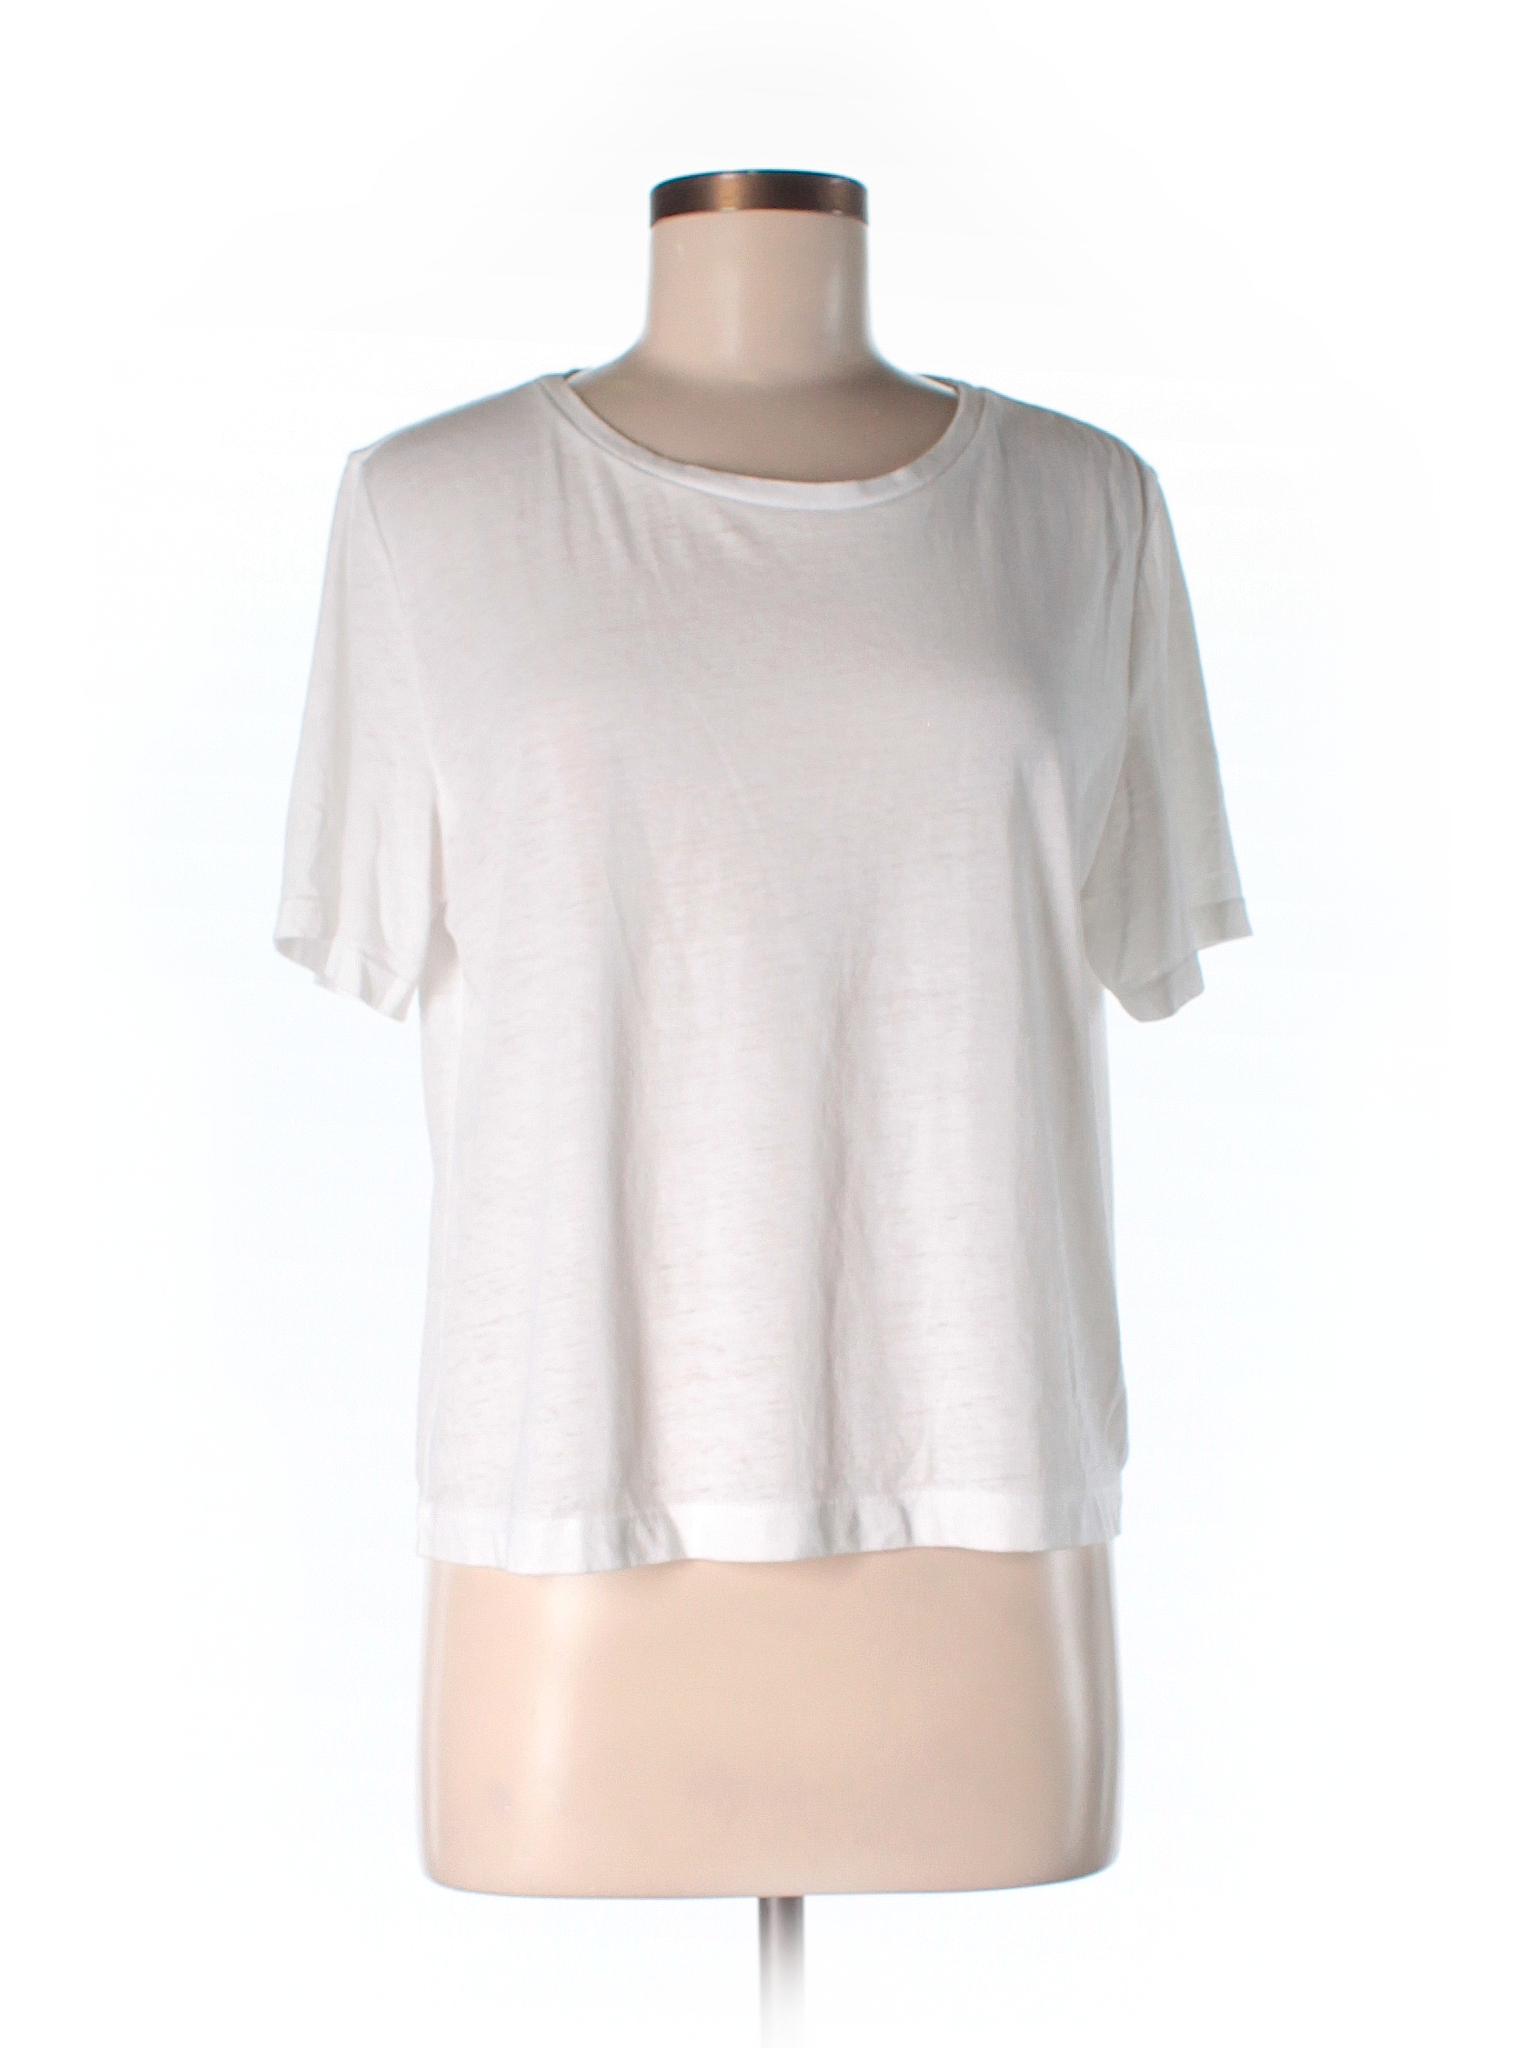 Gap Solid White Short Sleeve T-Shirt Size S (Petite) - 76% off | thredUP